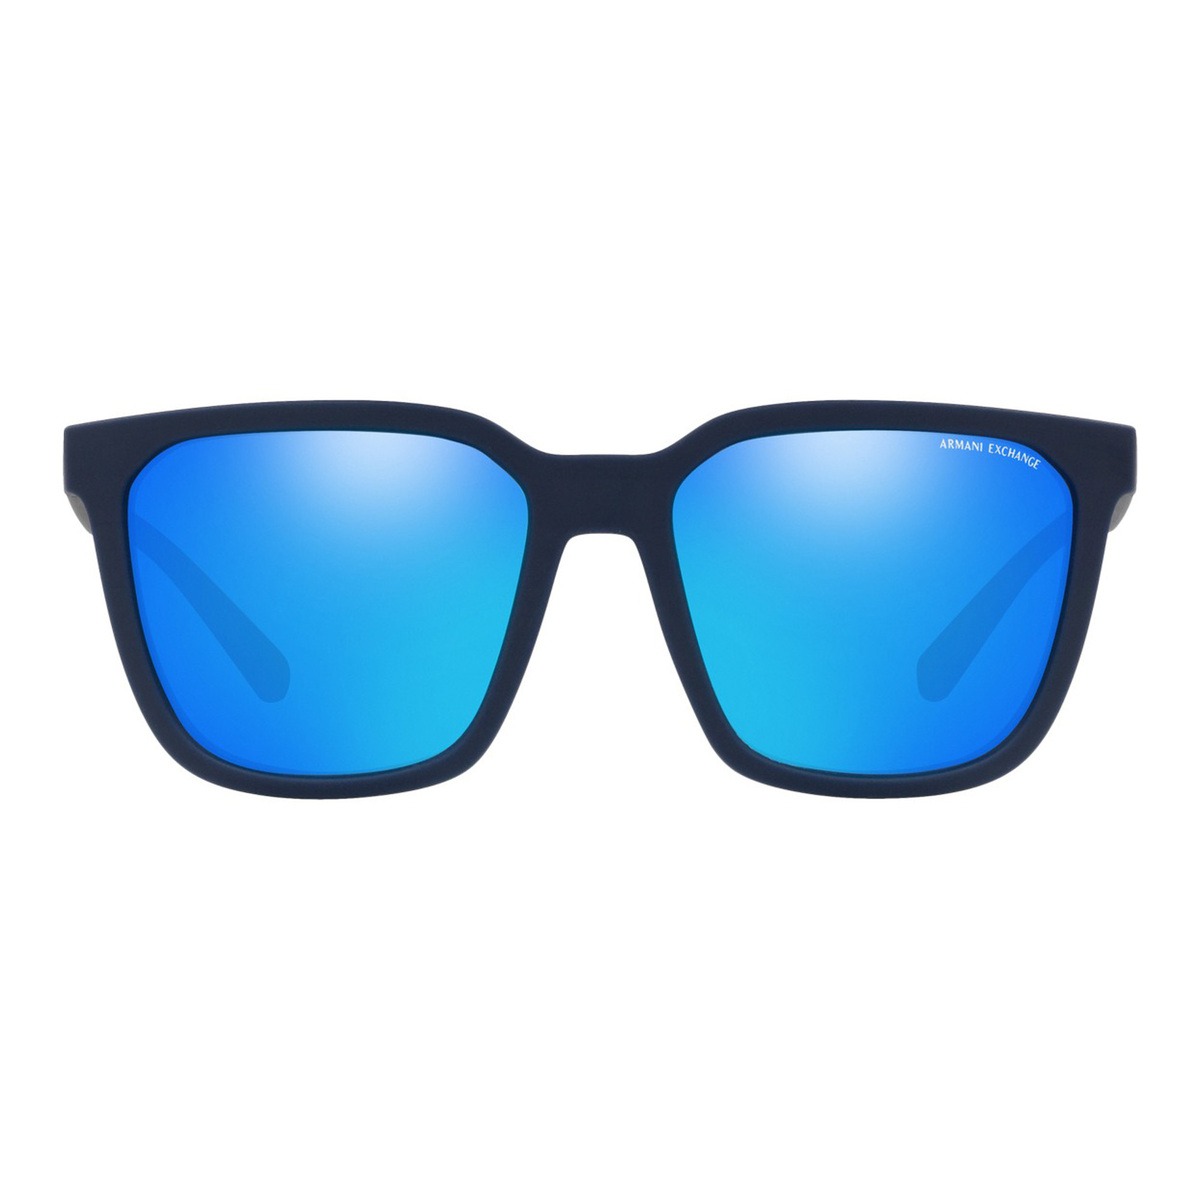 Armani Exchange Square Men's Sunglasses, Blue, 4108S-818125/57